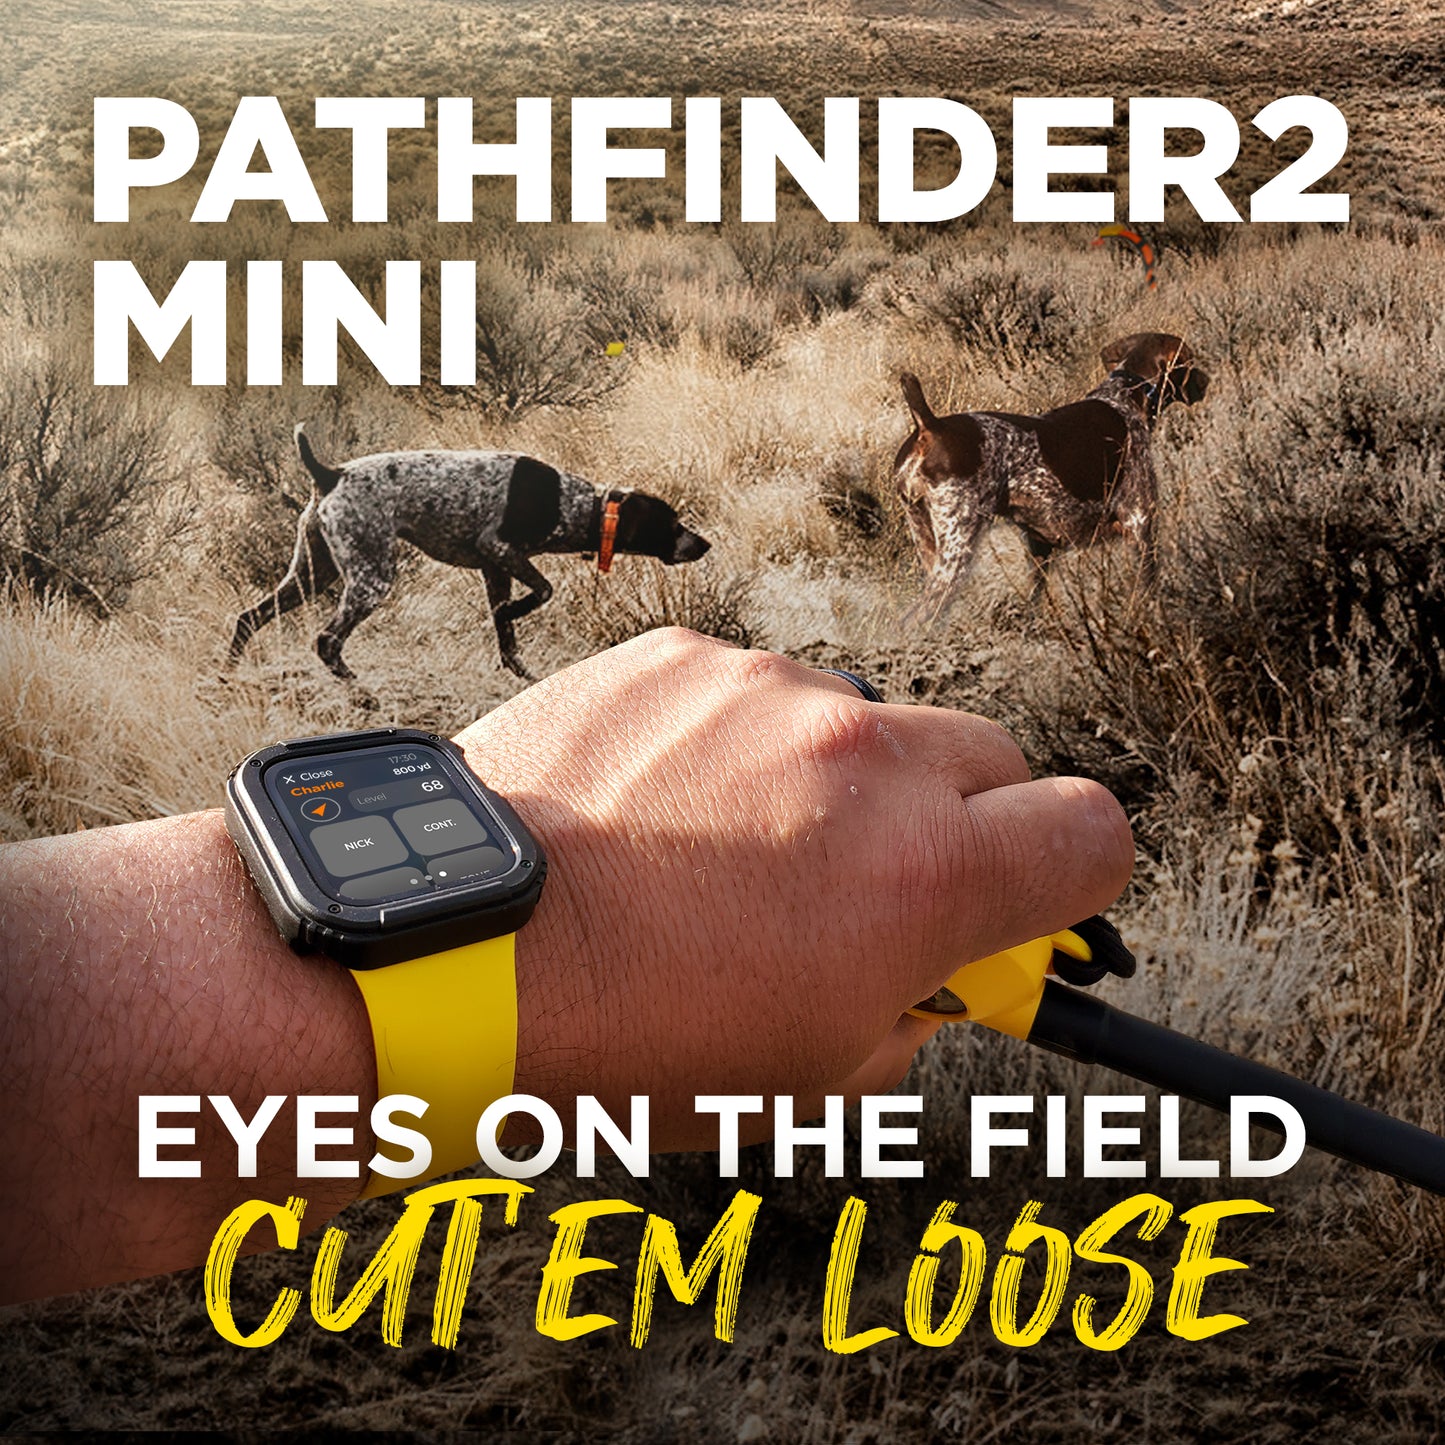 Dogtra Pathfinder2 Mini